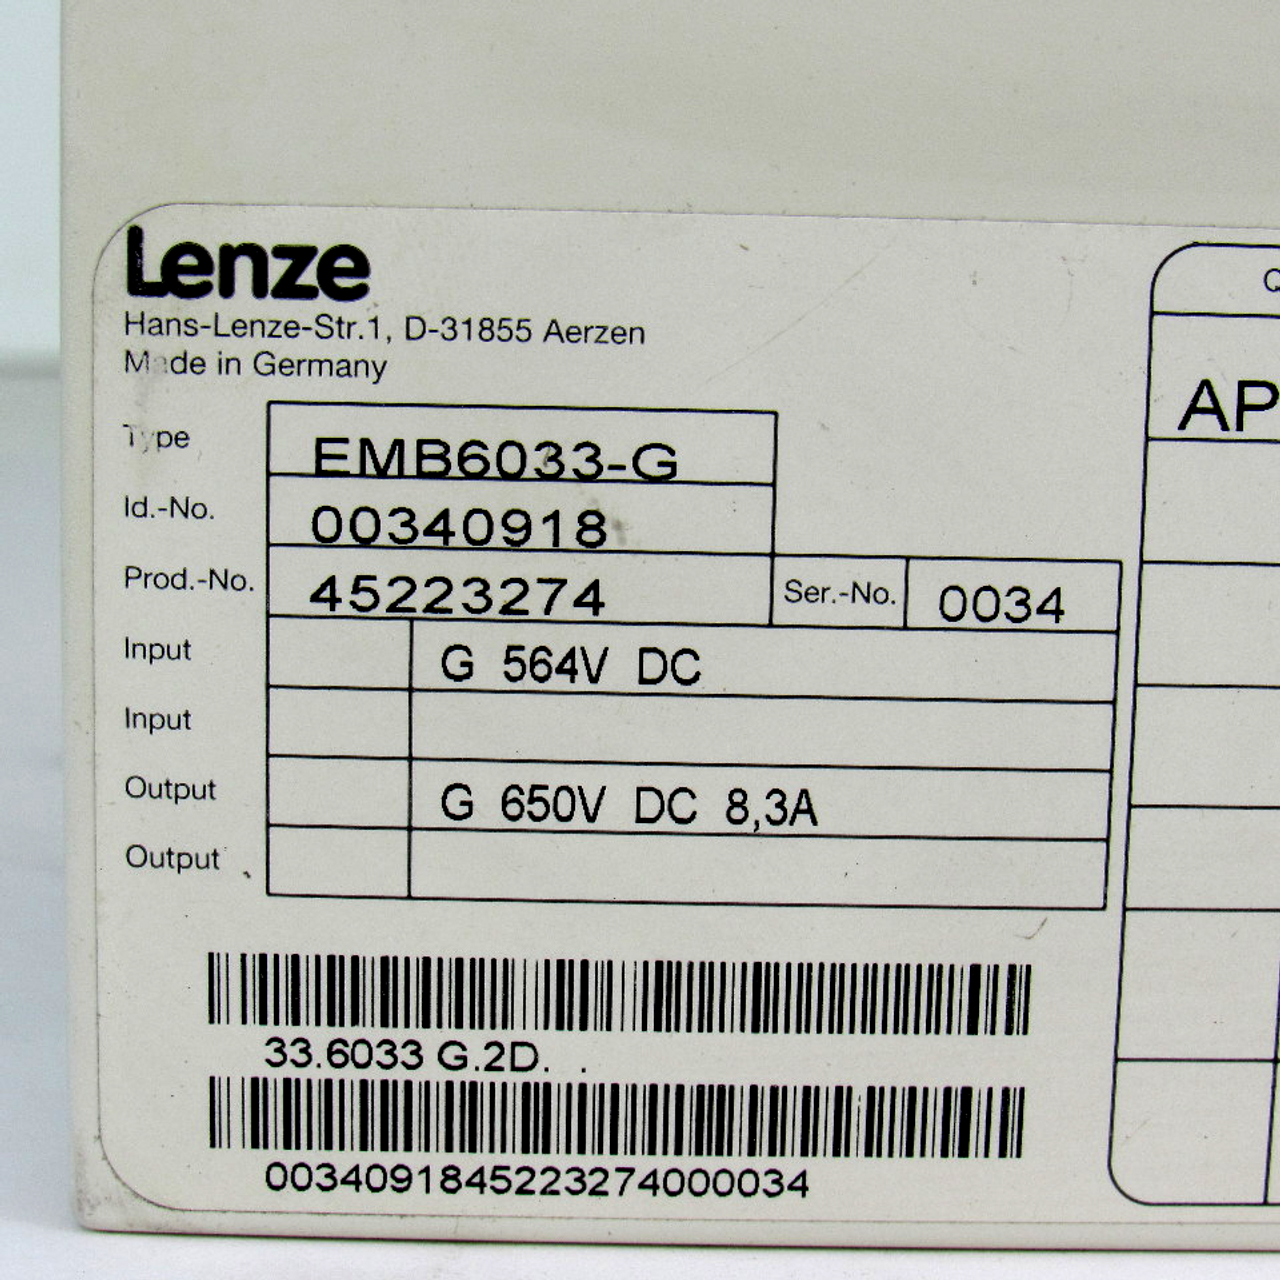 Lenze EMB6033-G Brake Chopper/Brake Module, Input: 564V DC, Output: 650V DC, 8,3A